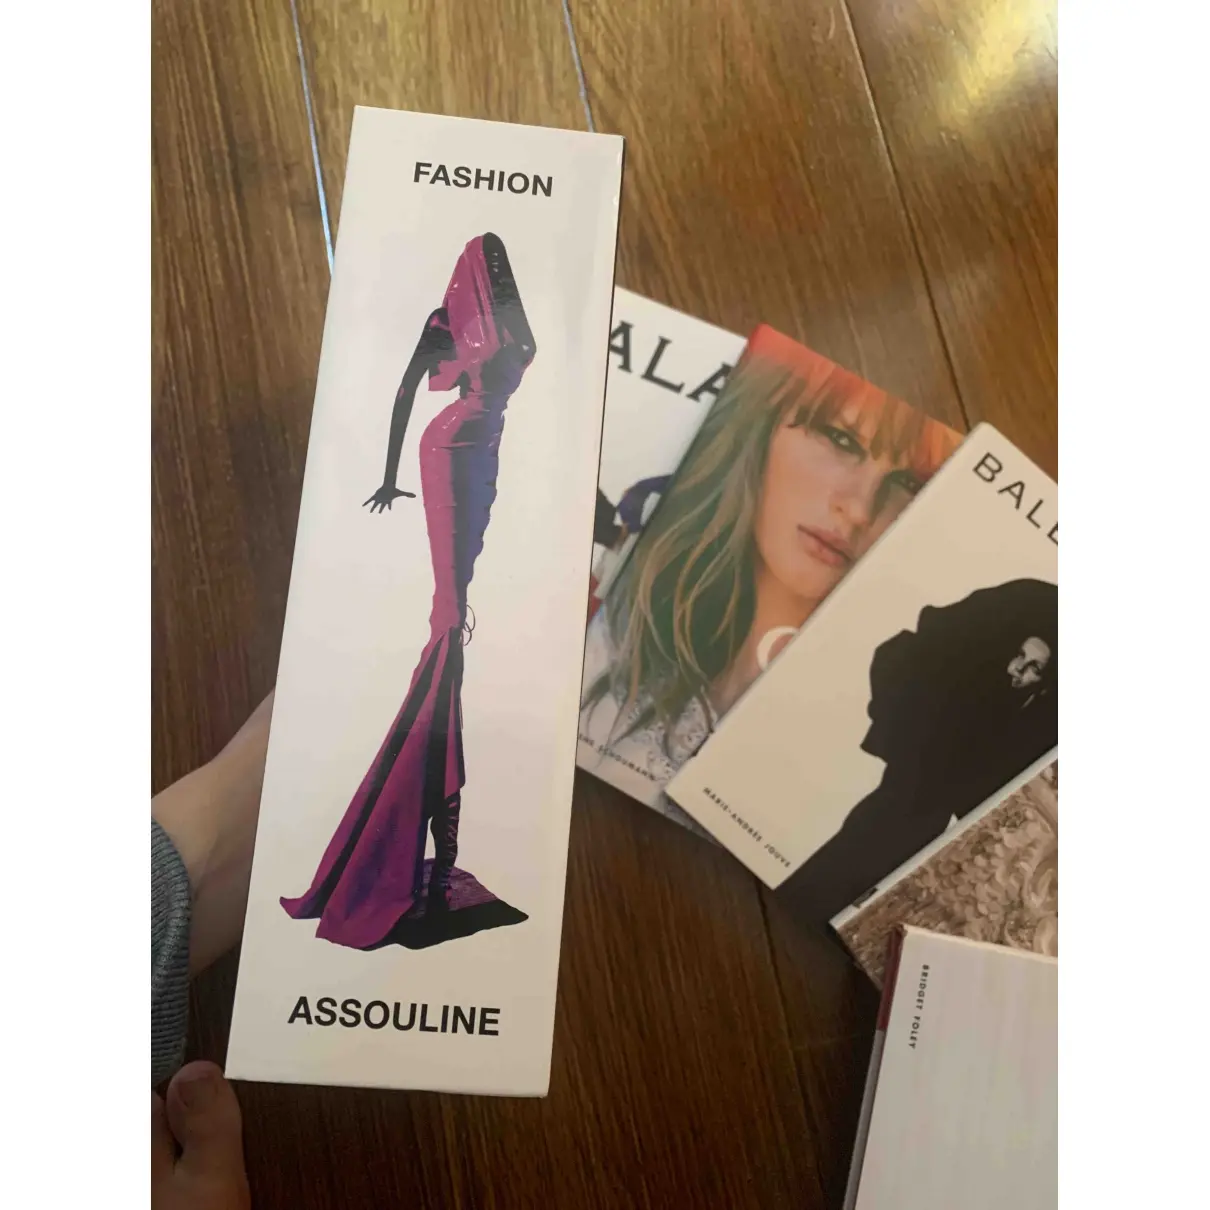 Buy Assouline Fashion online